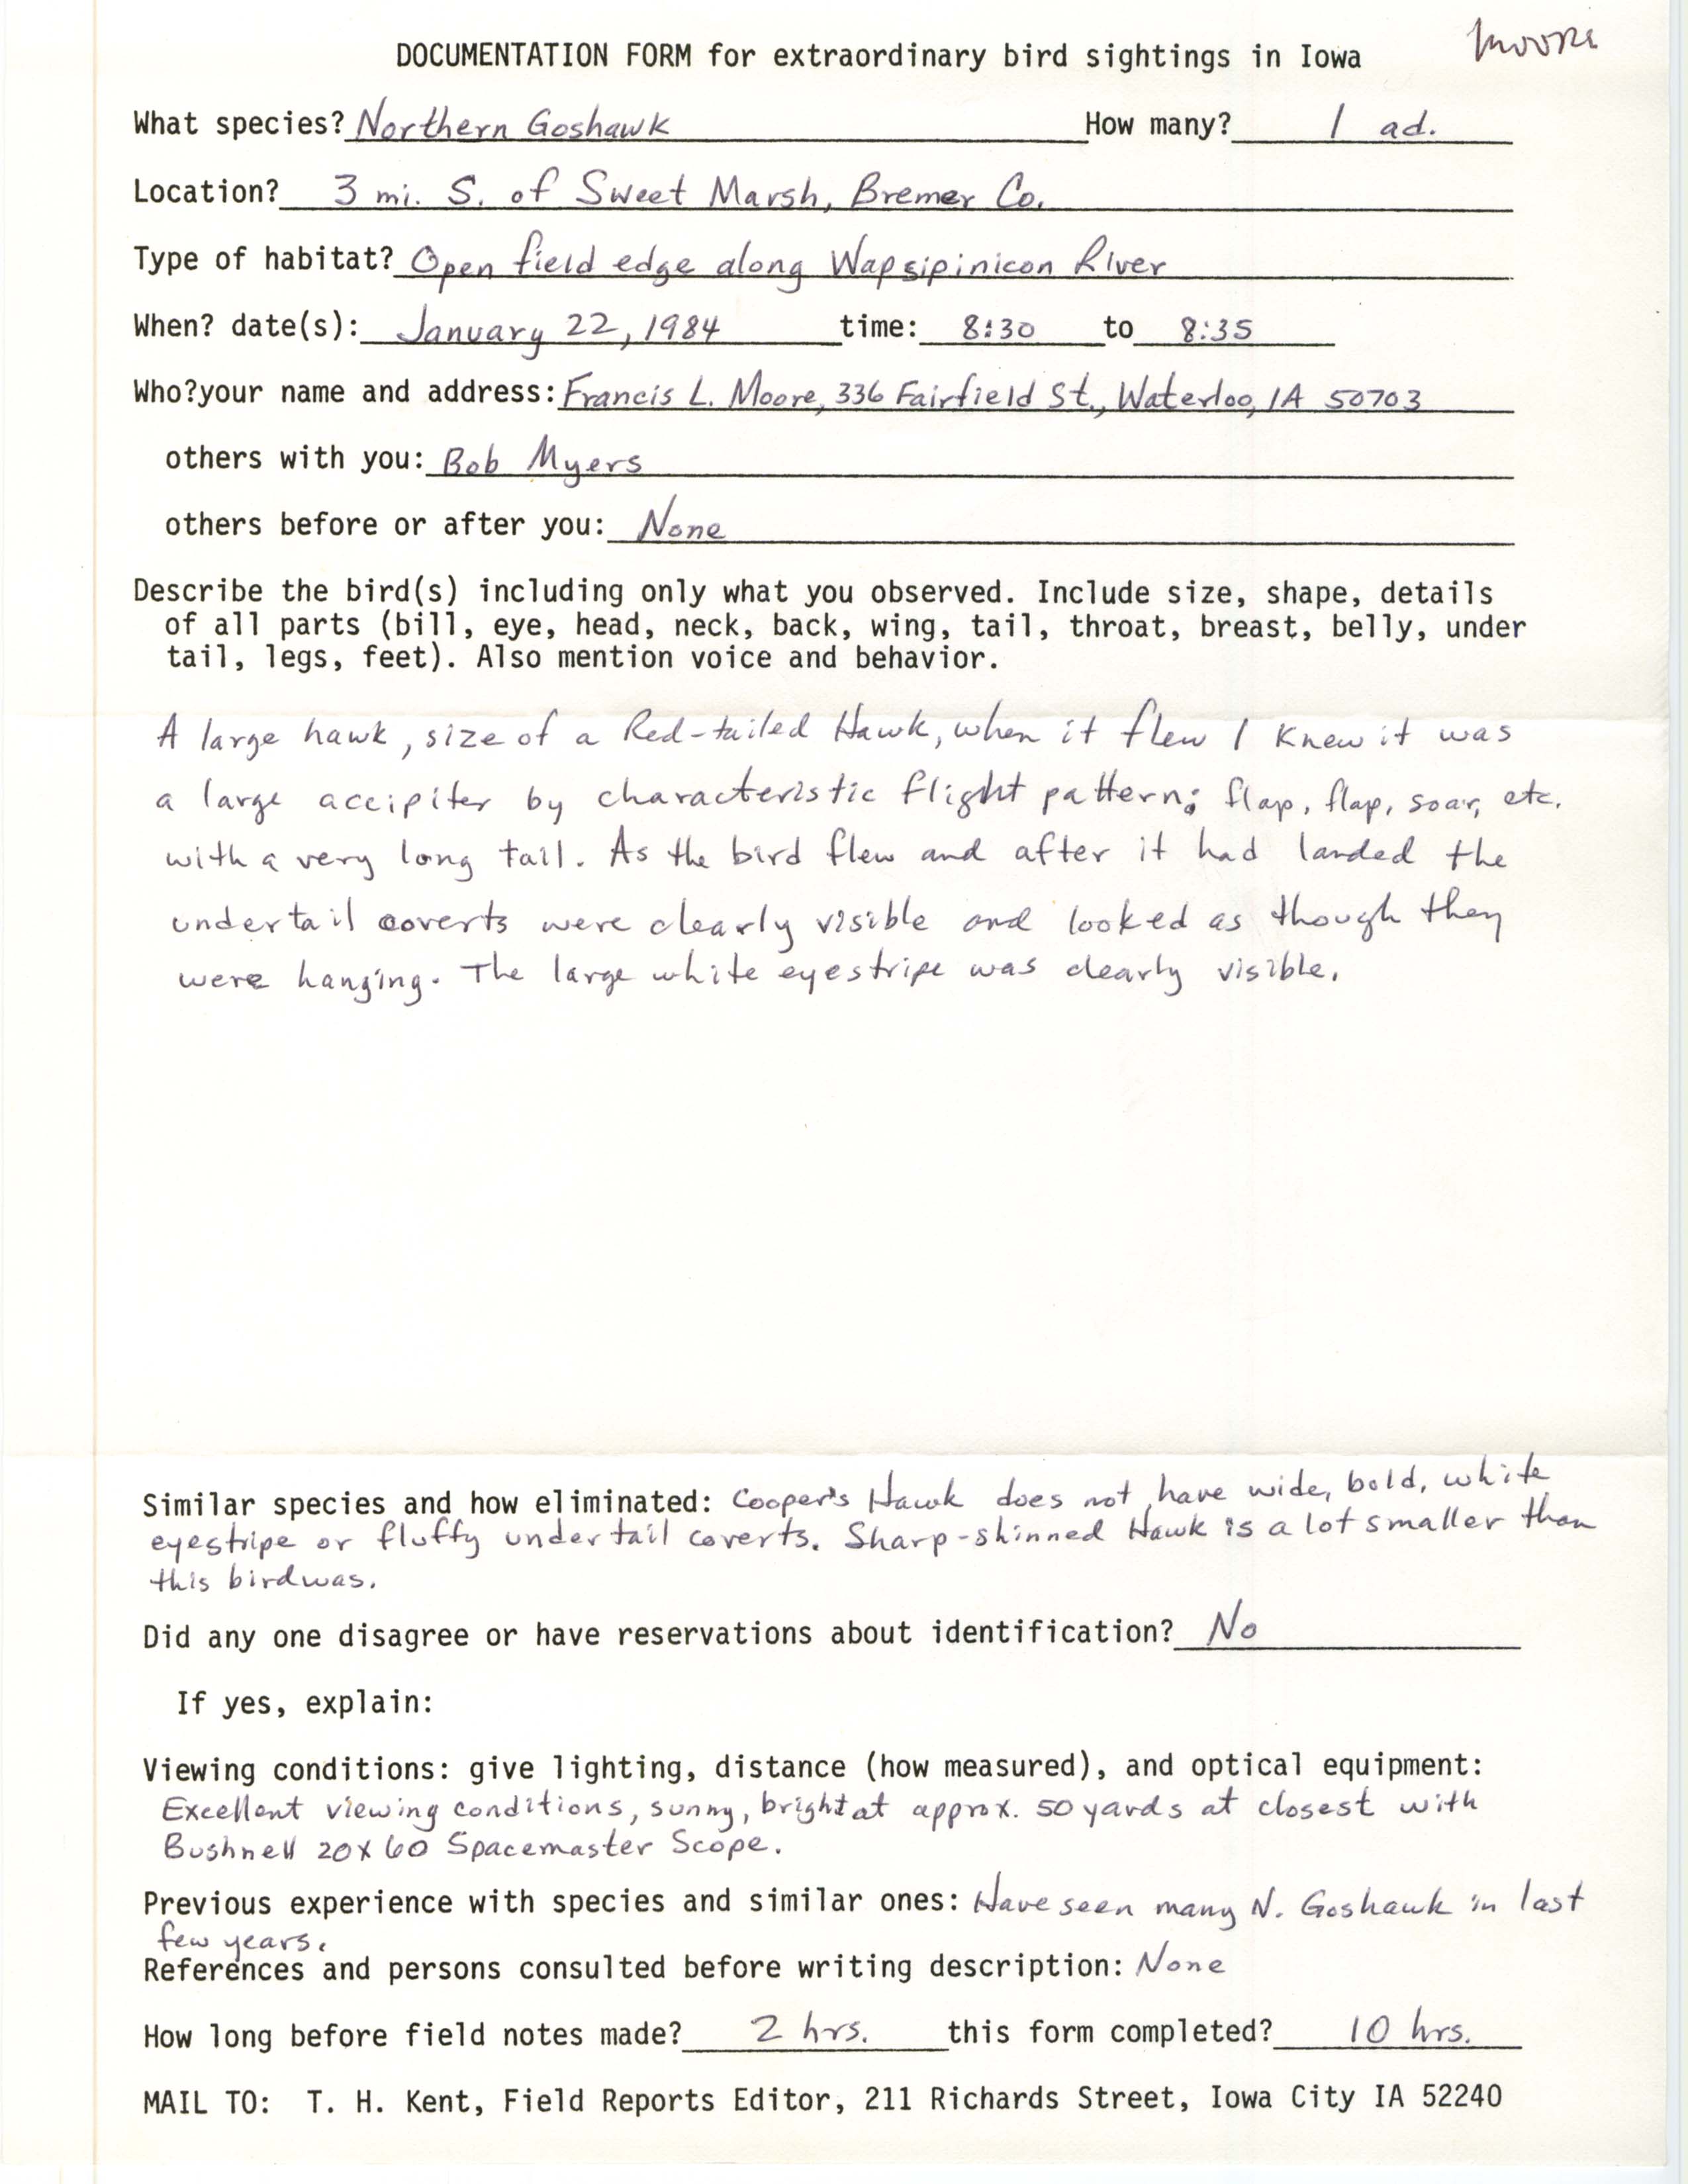 Rare bird documentation form for Northern Goshawk at Sweet Marsh, 1984